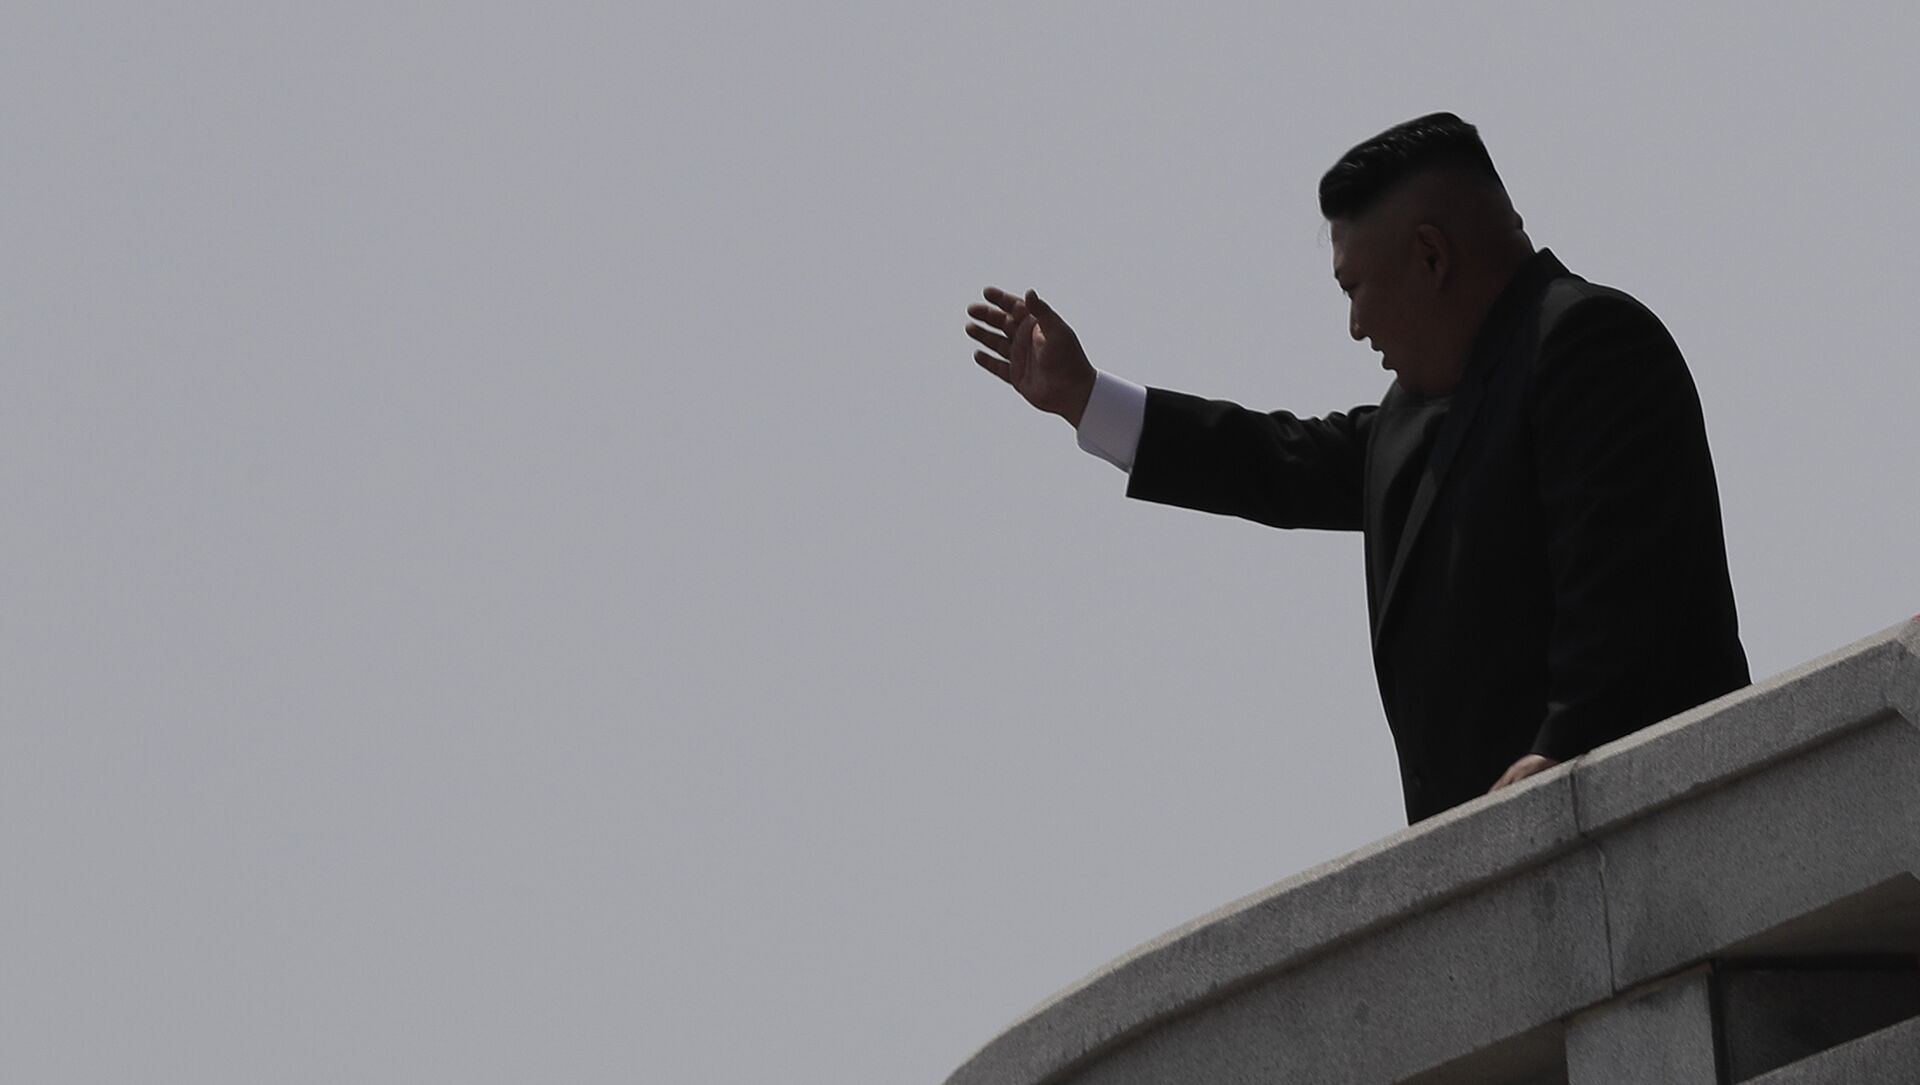 North Korean leader Kim Jong Un is seen in silhouette as he waves during a military parade in Pyongyang, North Korea  - Sputnik International, 1920, 20.06.2021